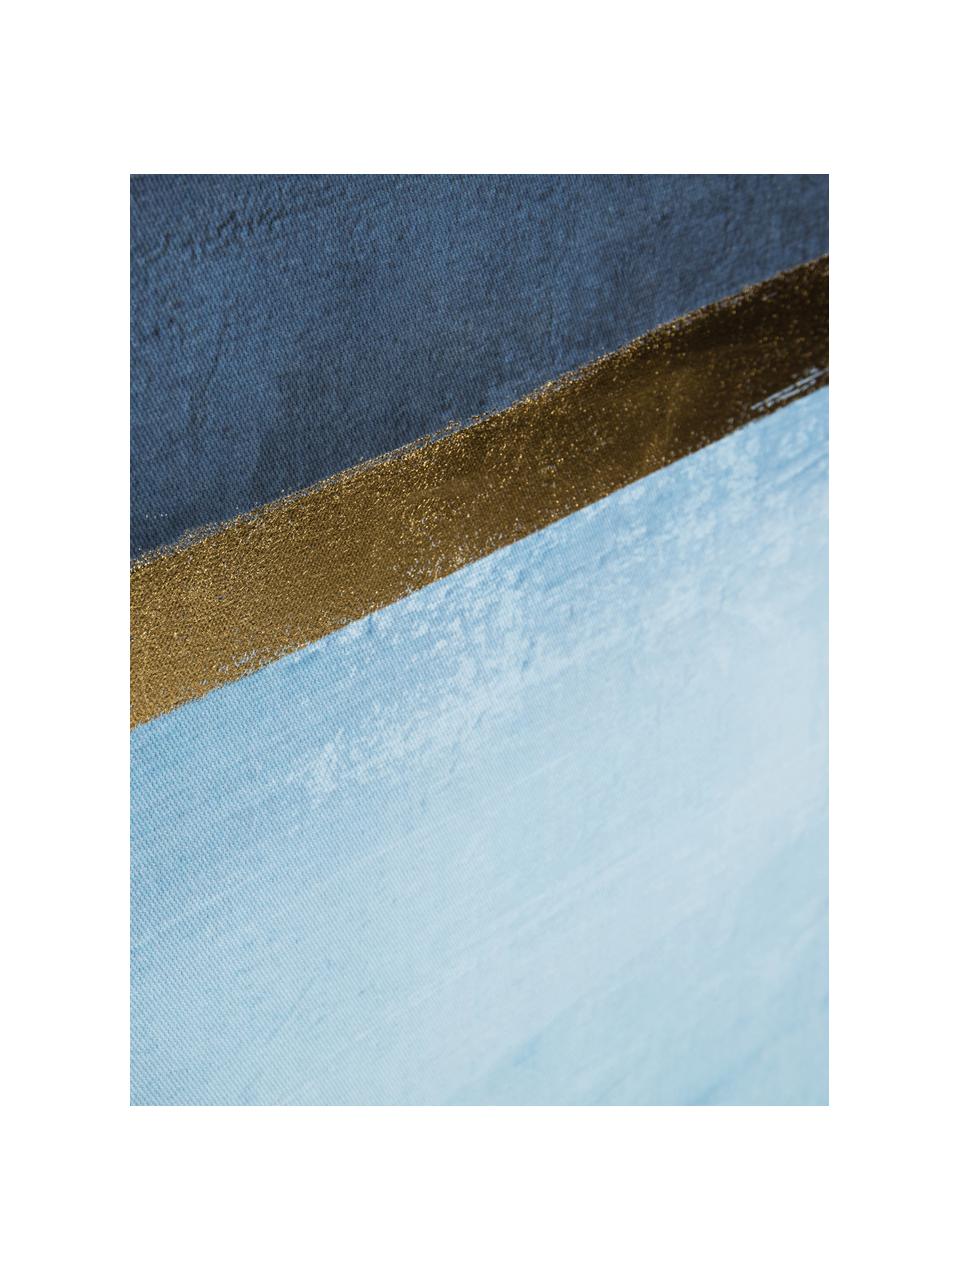 Gerahmter Leinwanddruck Wrigley, Rahmen: Mitteldichte Holzfaserpla, Bild: Leinwand, Blautöne, Goldfarben, B 60 x H 90 cm